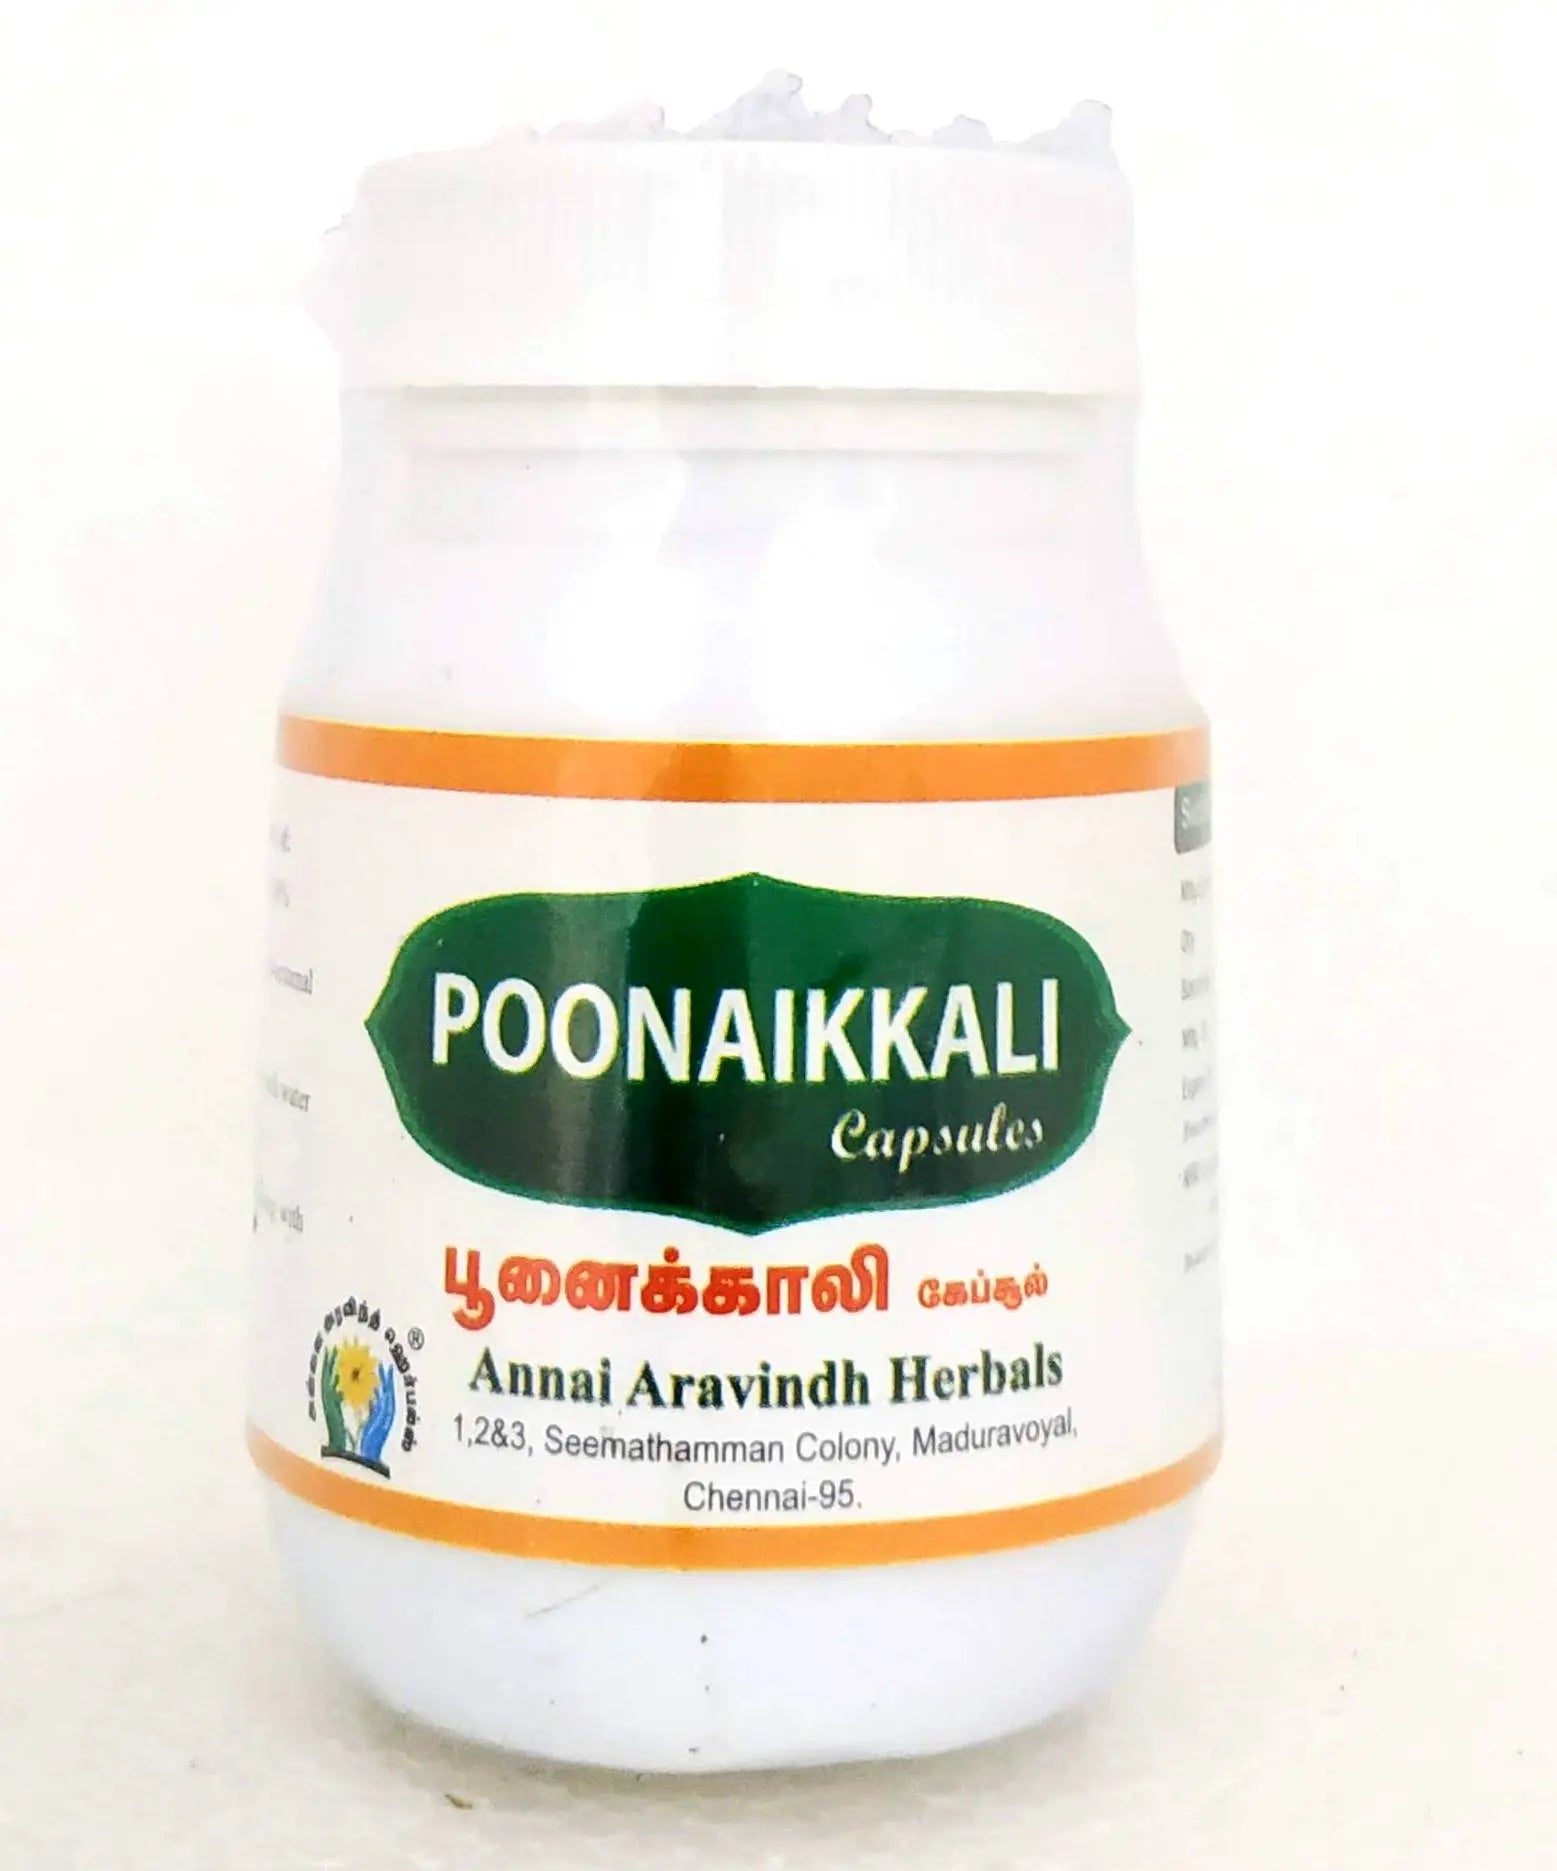 Poonaikali capsules - 30Capsules Annai Aravindh